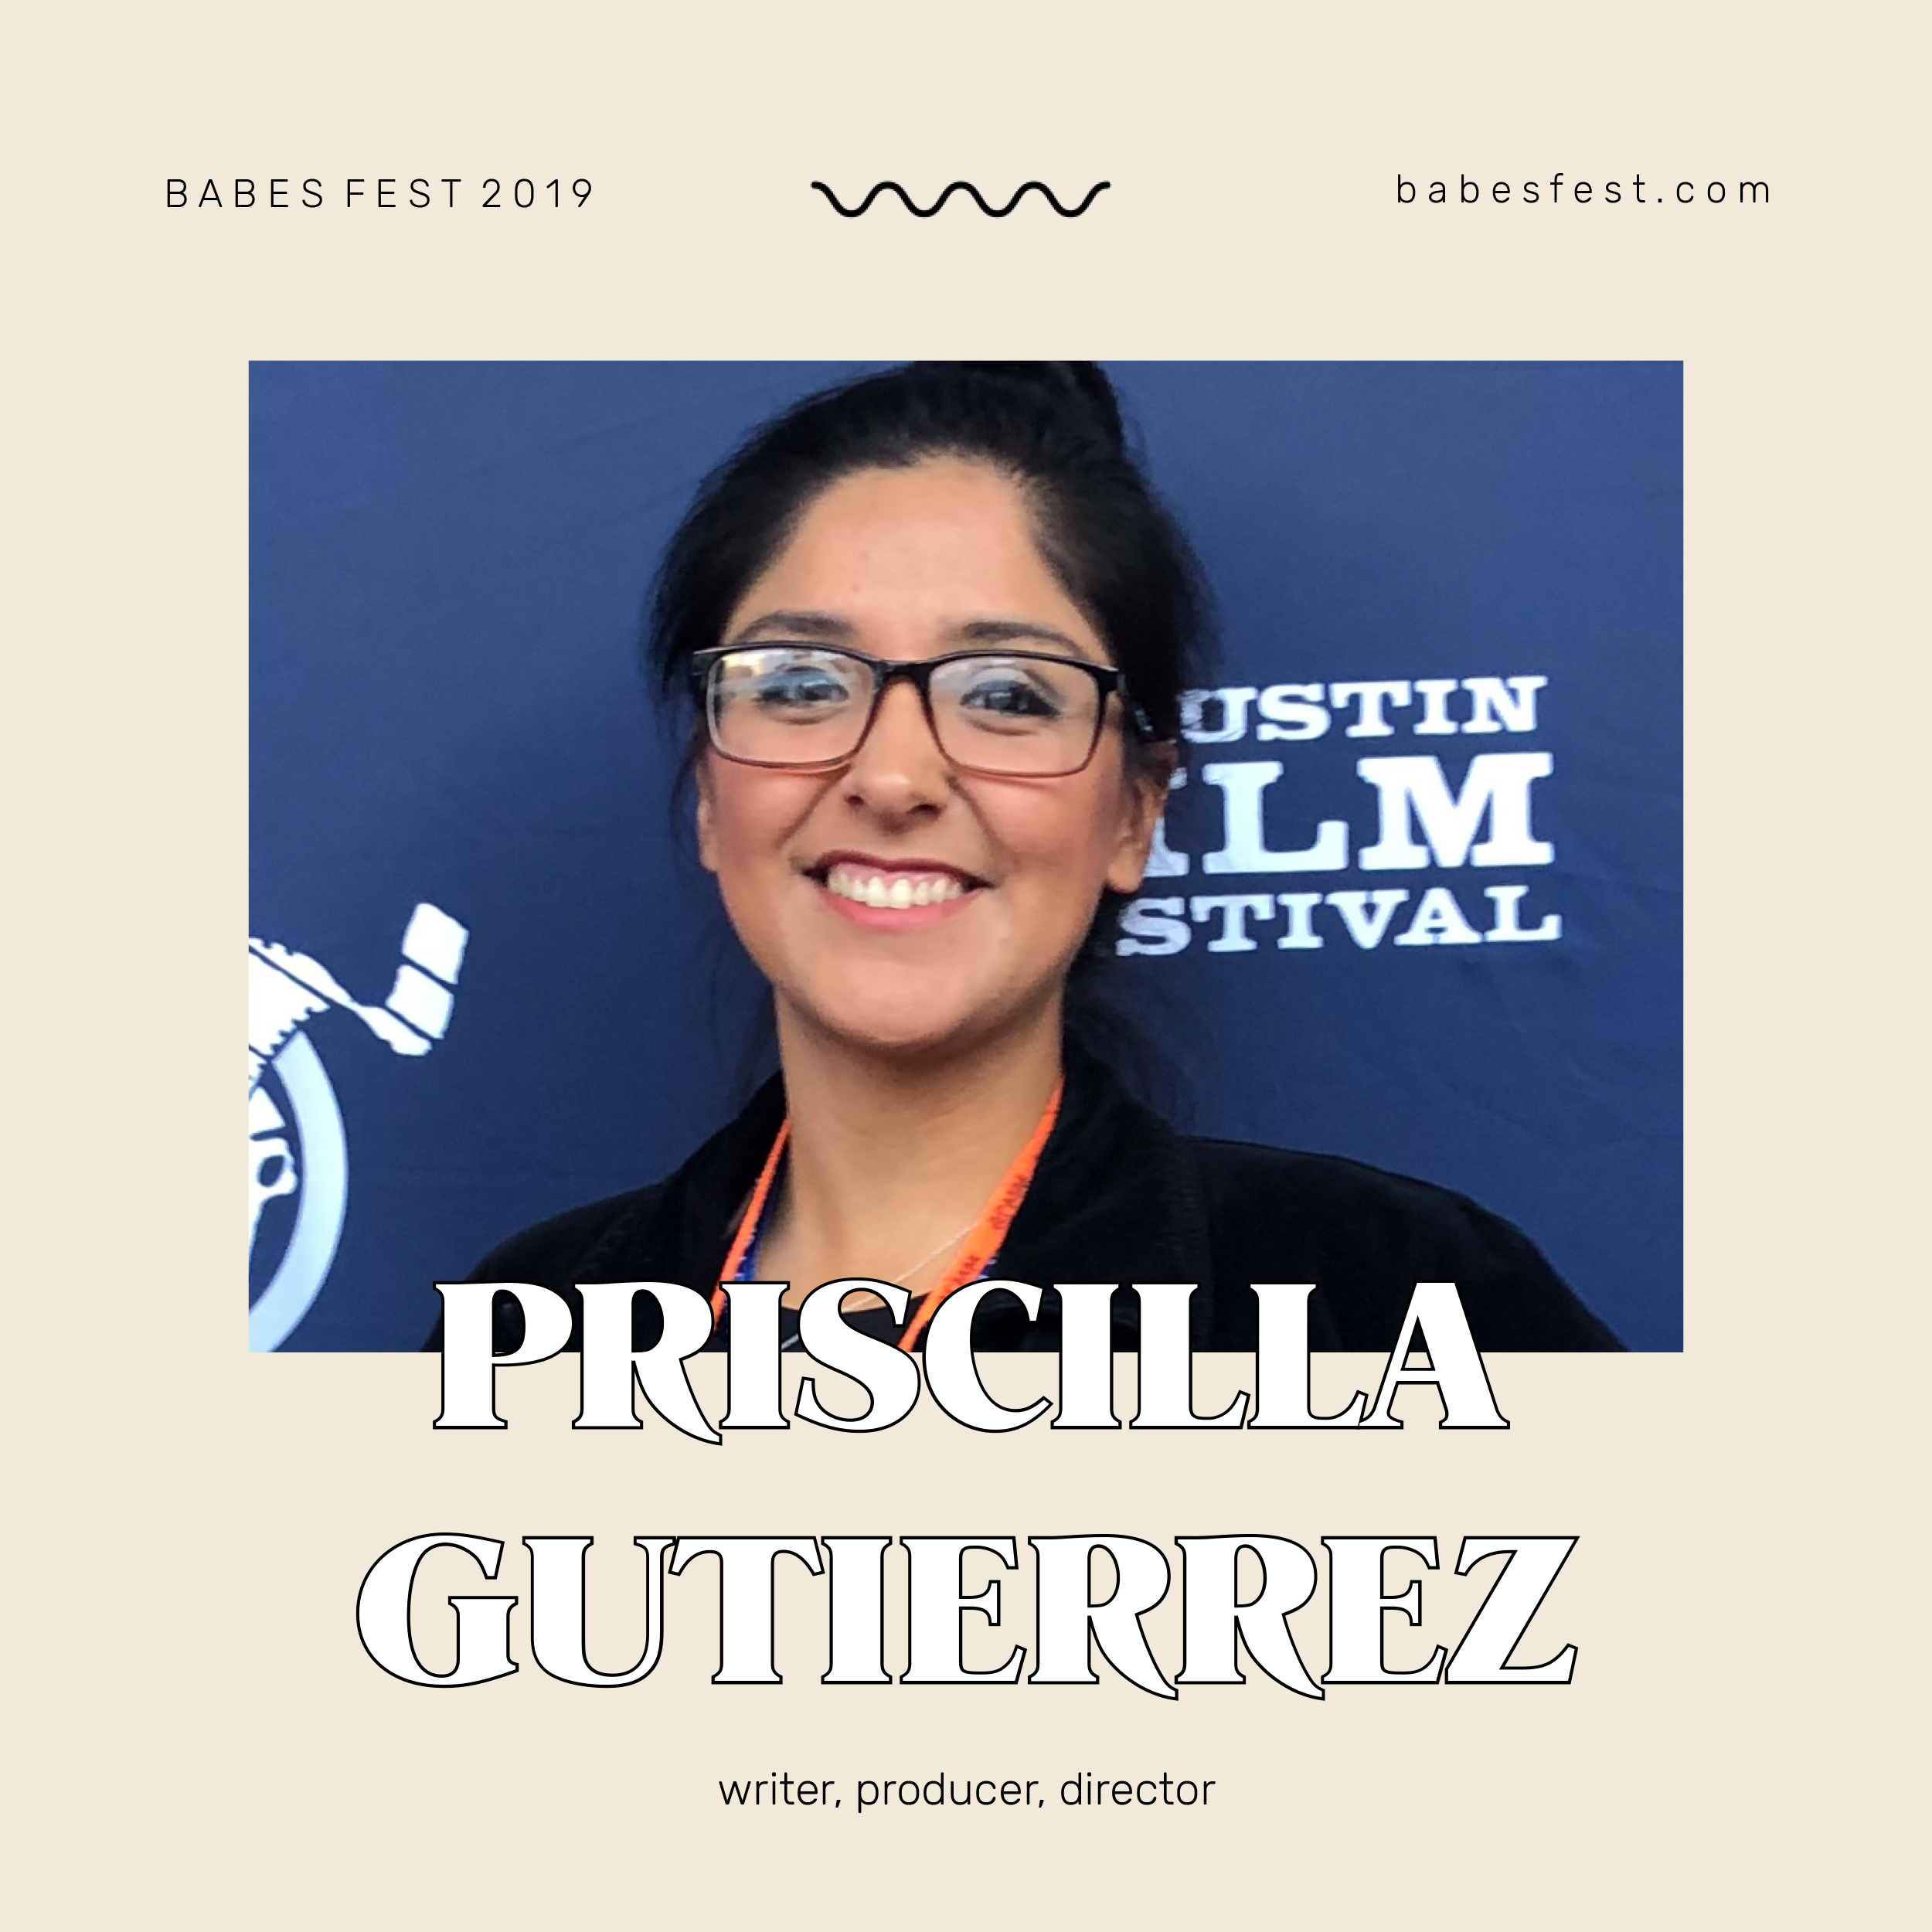 Priscilla Gutierrez